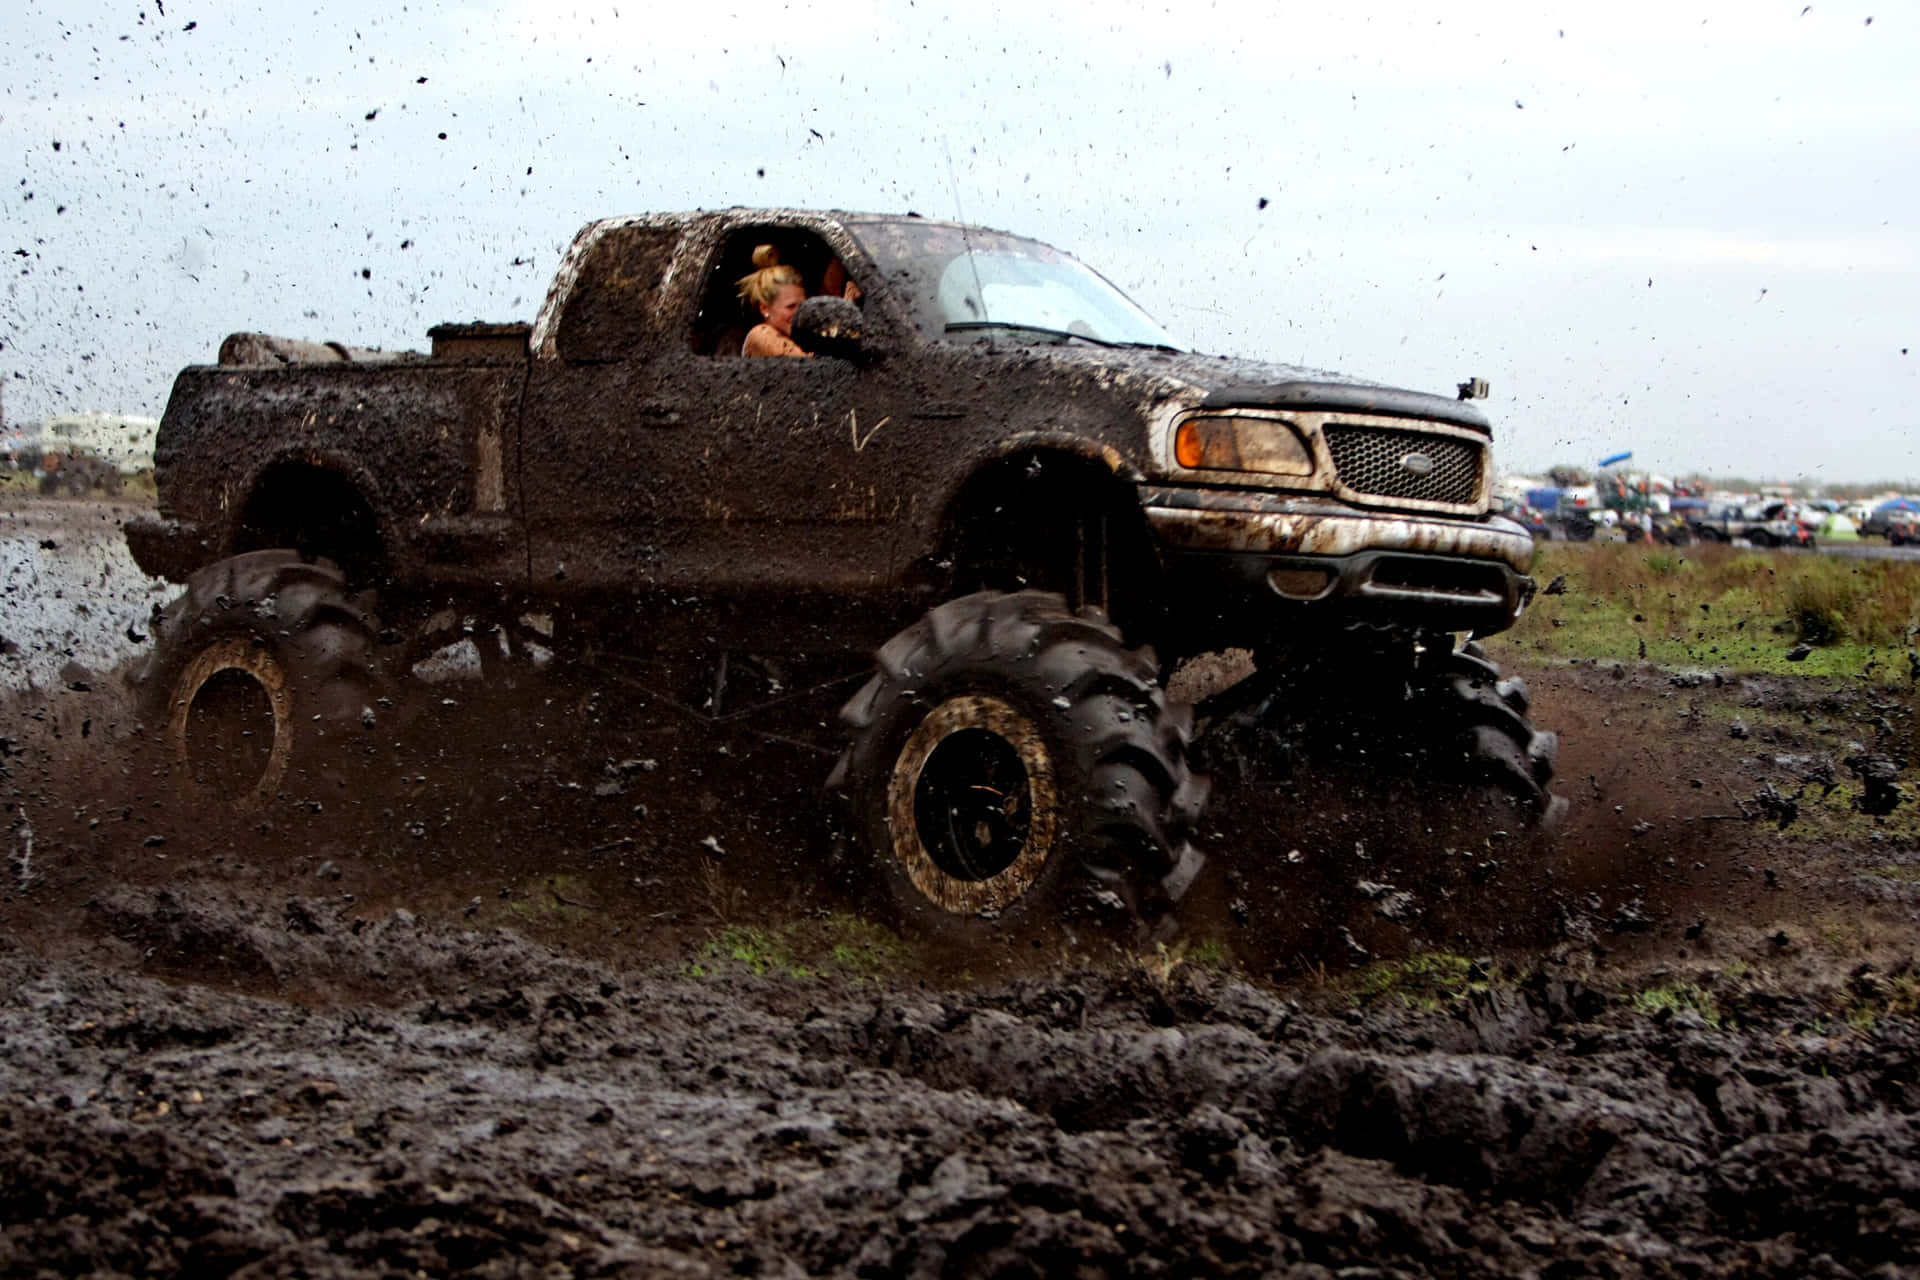 Mud Bogging Ford F-150 Monster Truck Wallpaper